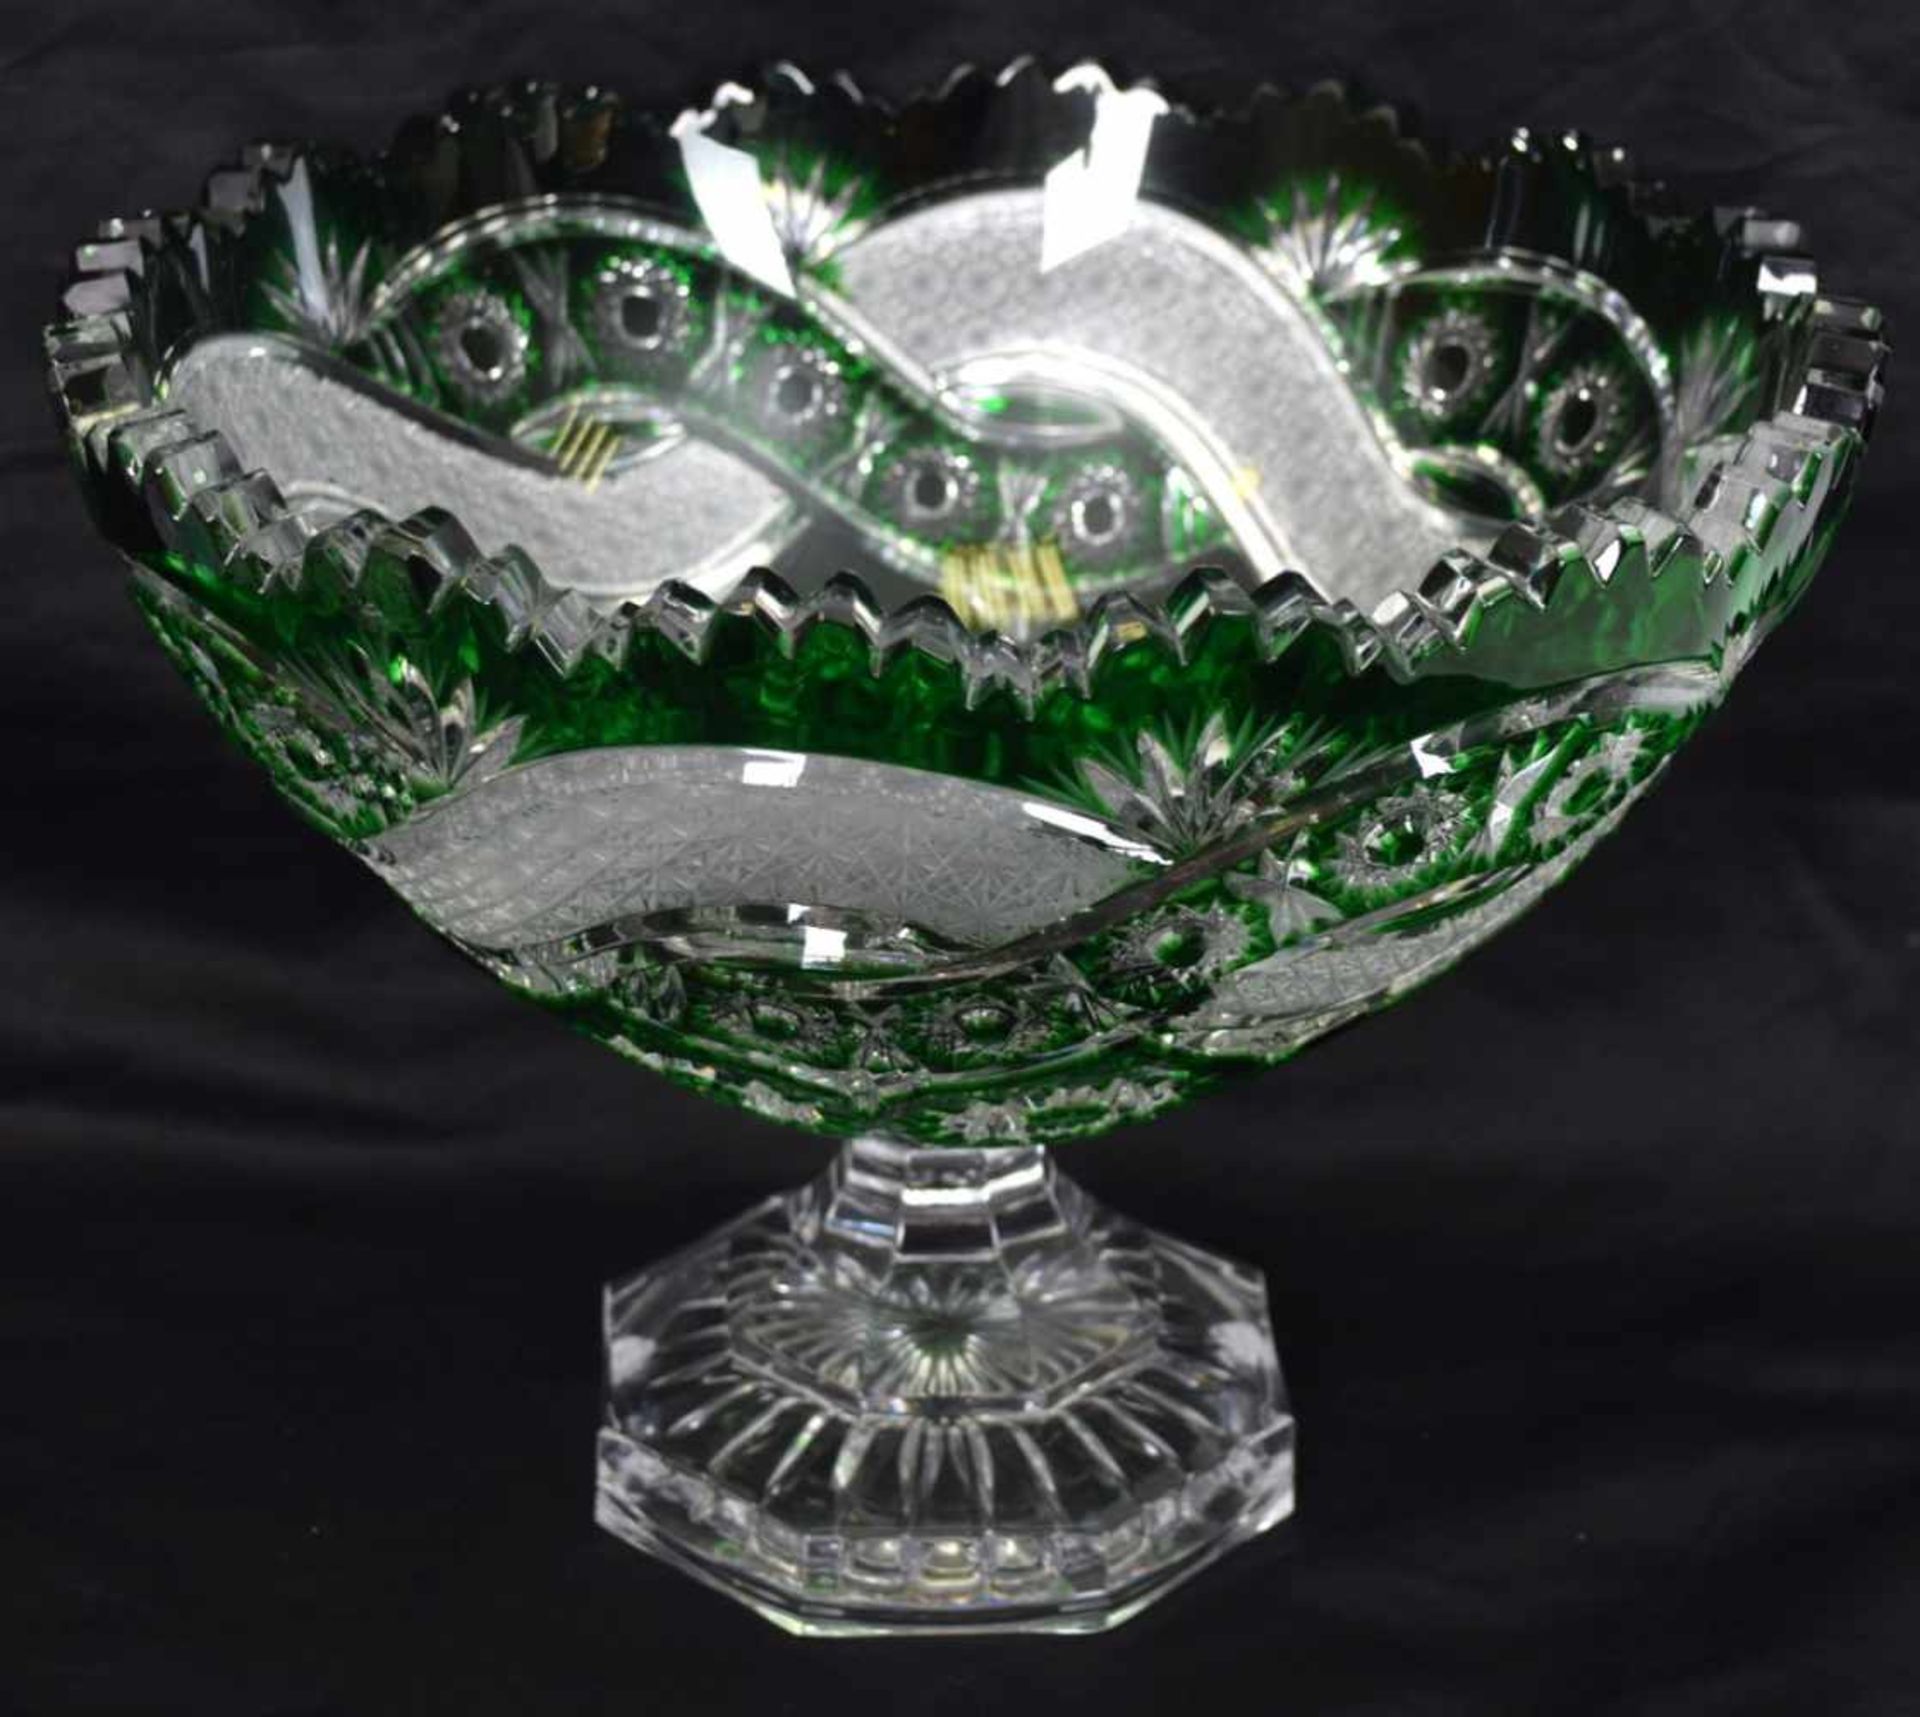 Aufsatzschalefarbl. Kristallglas, geschliffen verziert, gezackter Rand, mit grünem Überfang, H 21